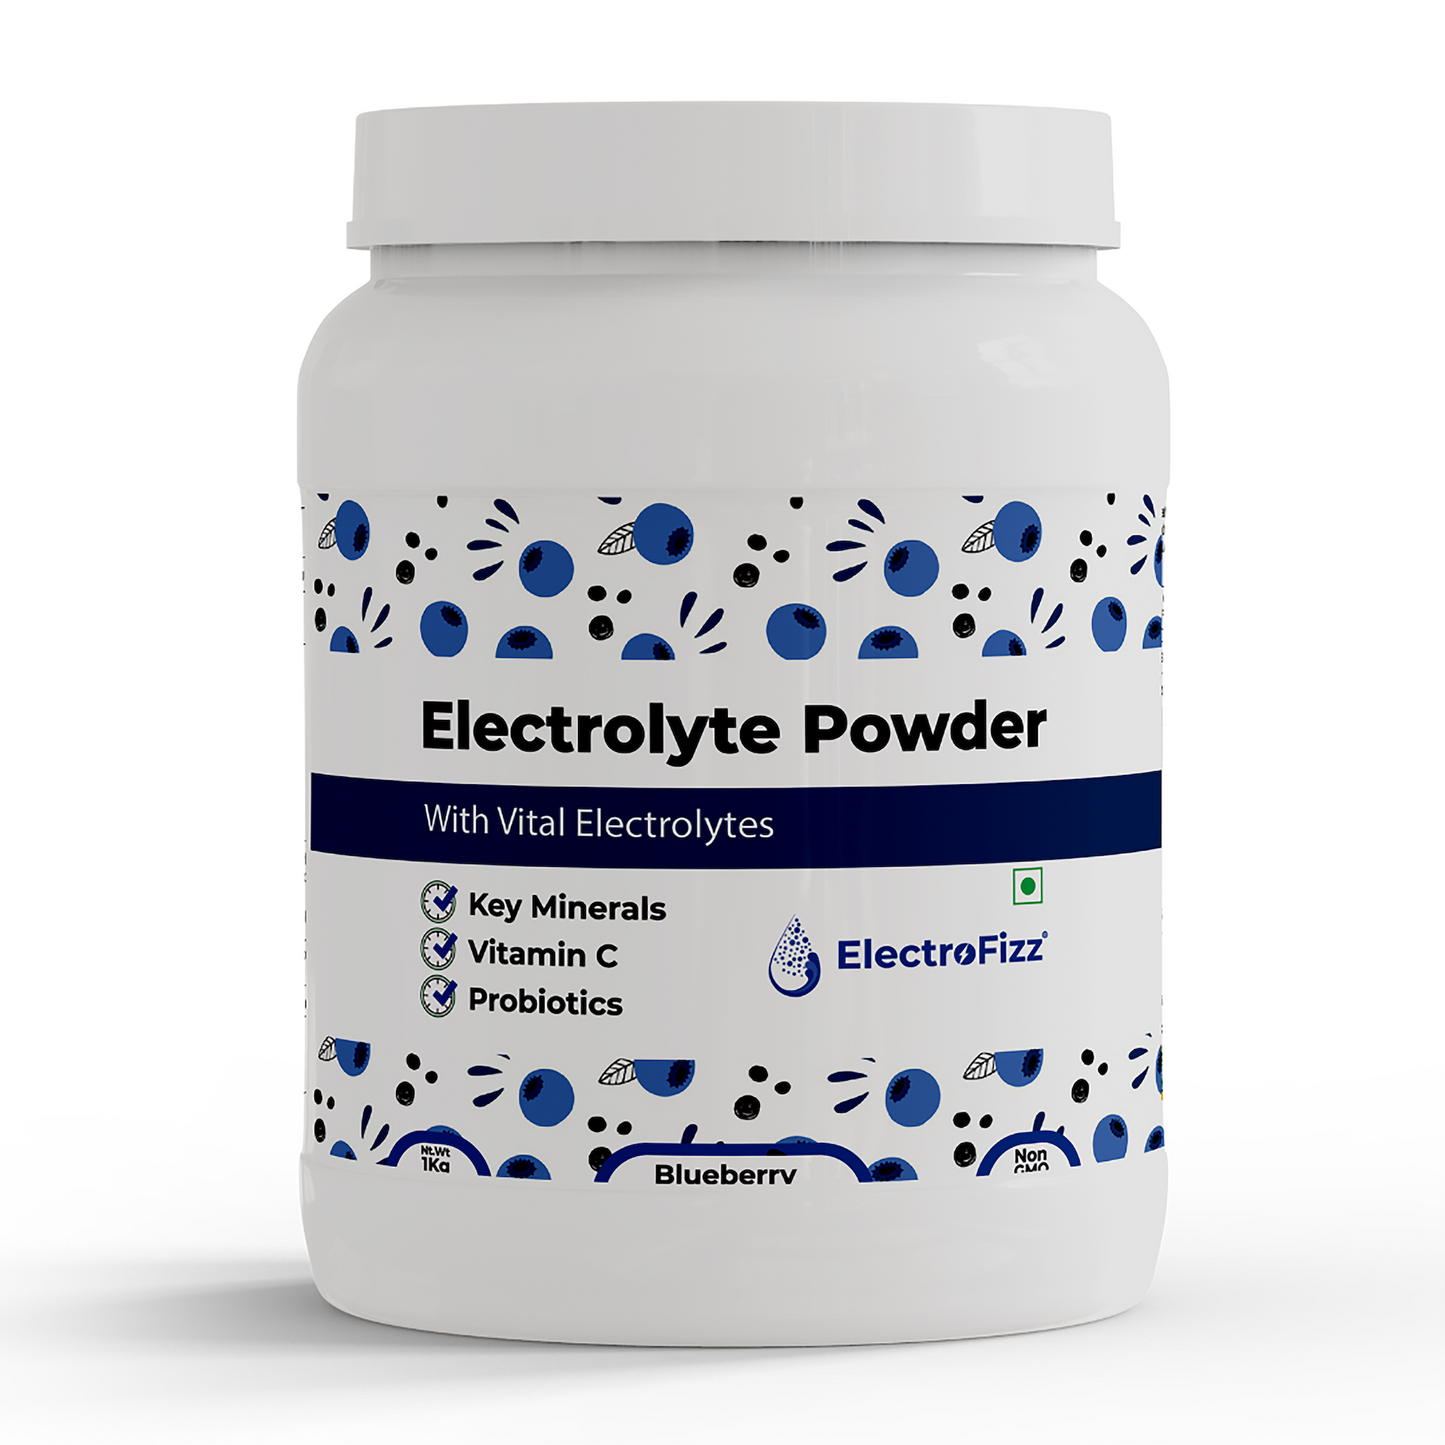 ElectroFizz Instant Hydration Energy Drink Powder for Workout for Men and Women- Electrolytes, Vitamin C, Probiotics - 1 Kg Jar Pack